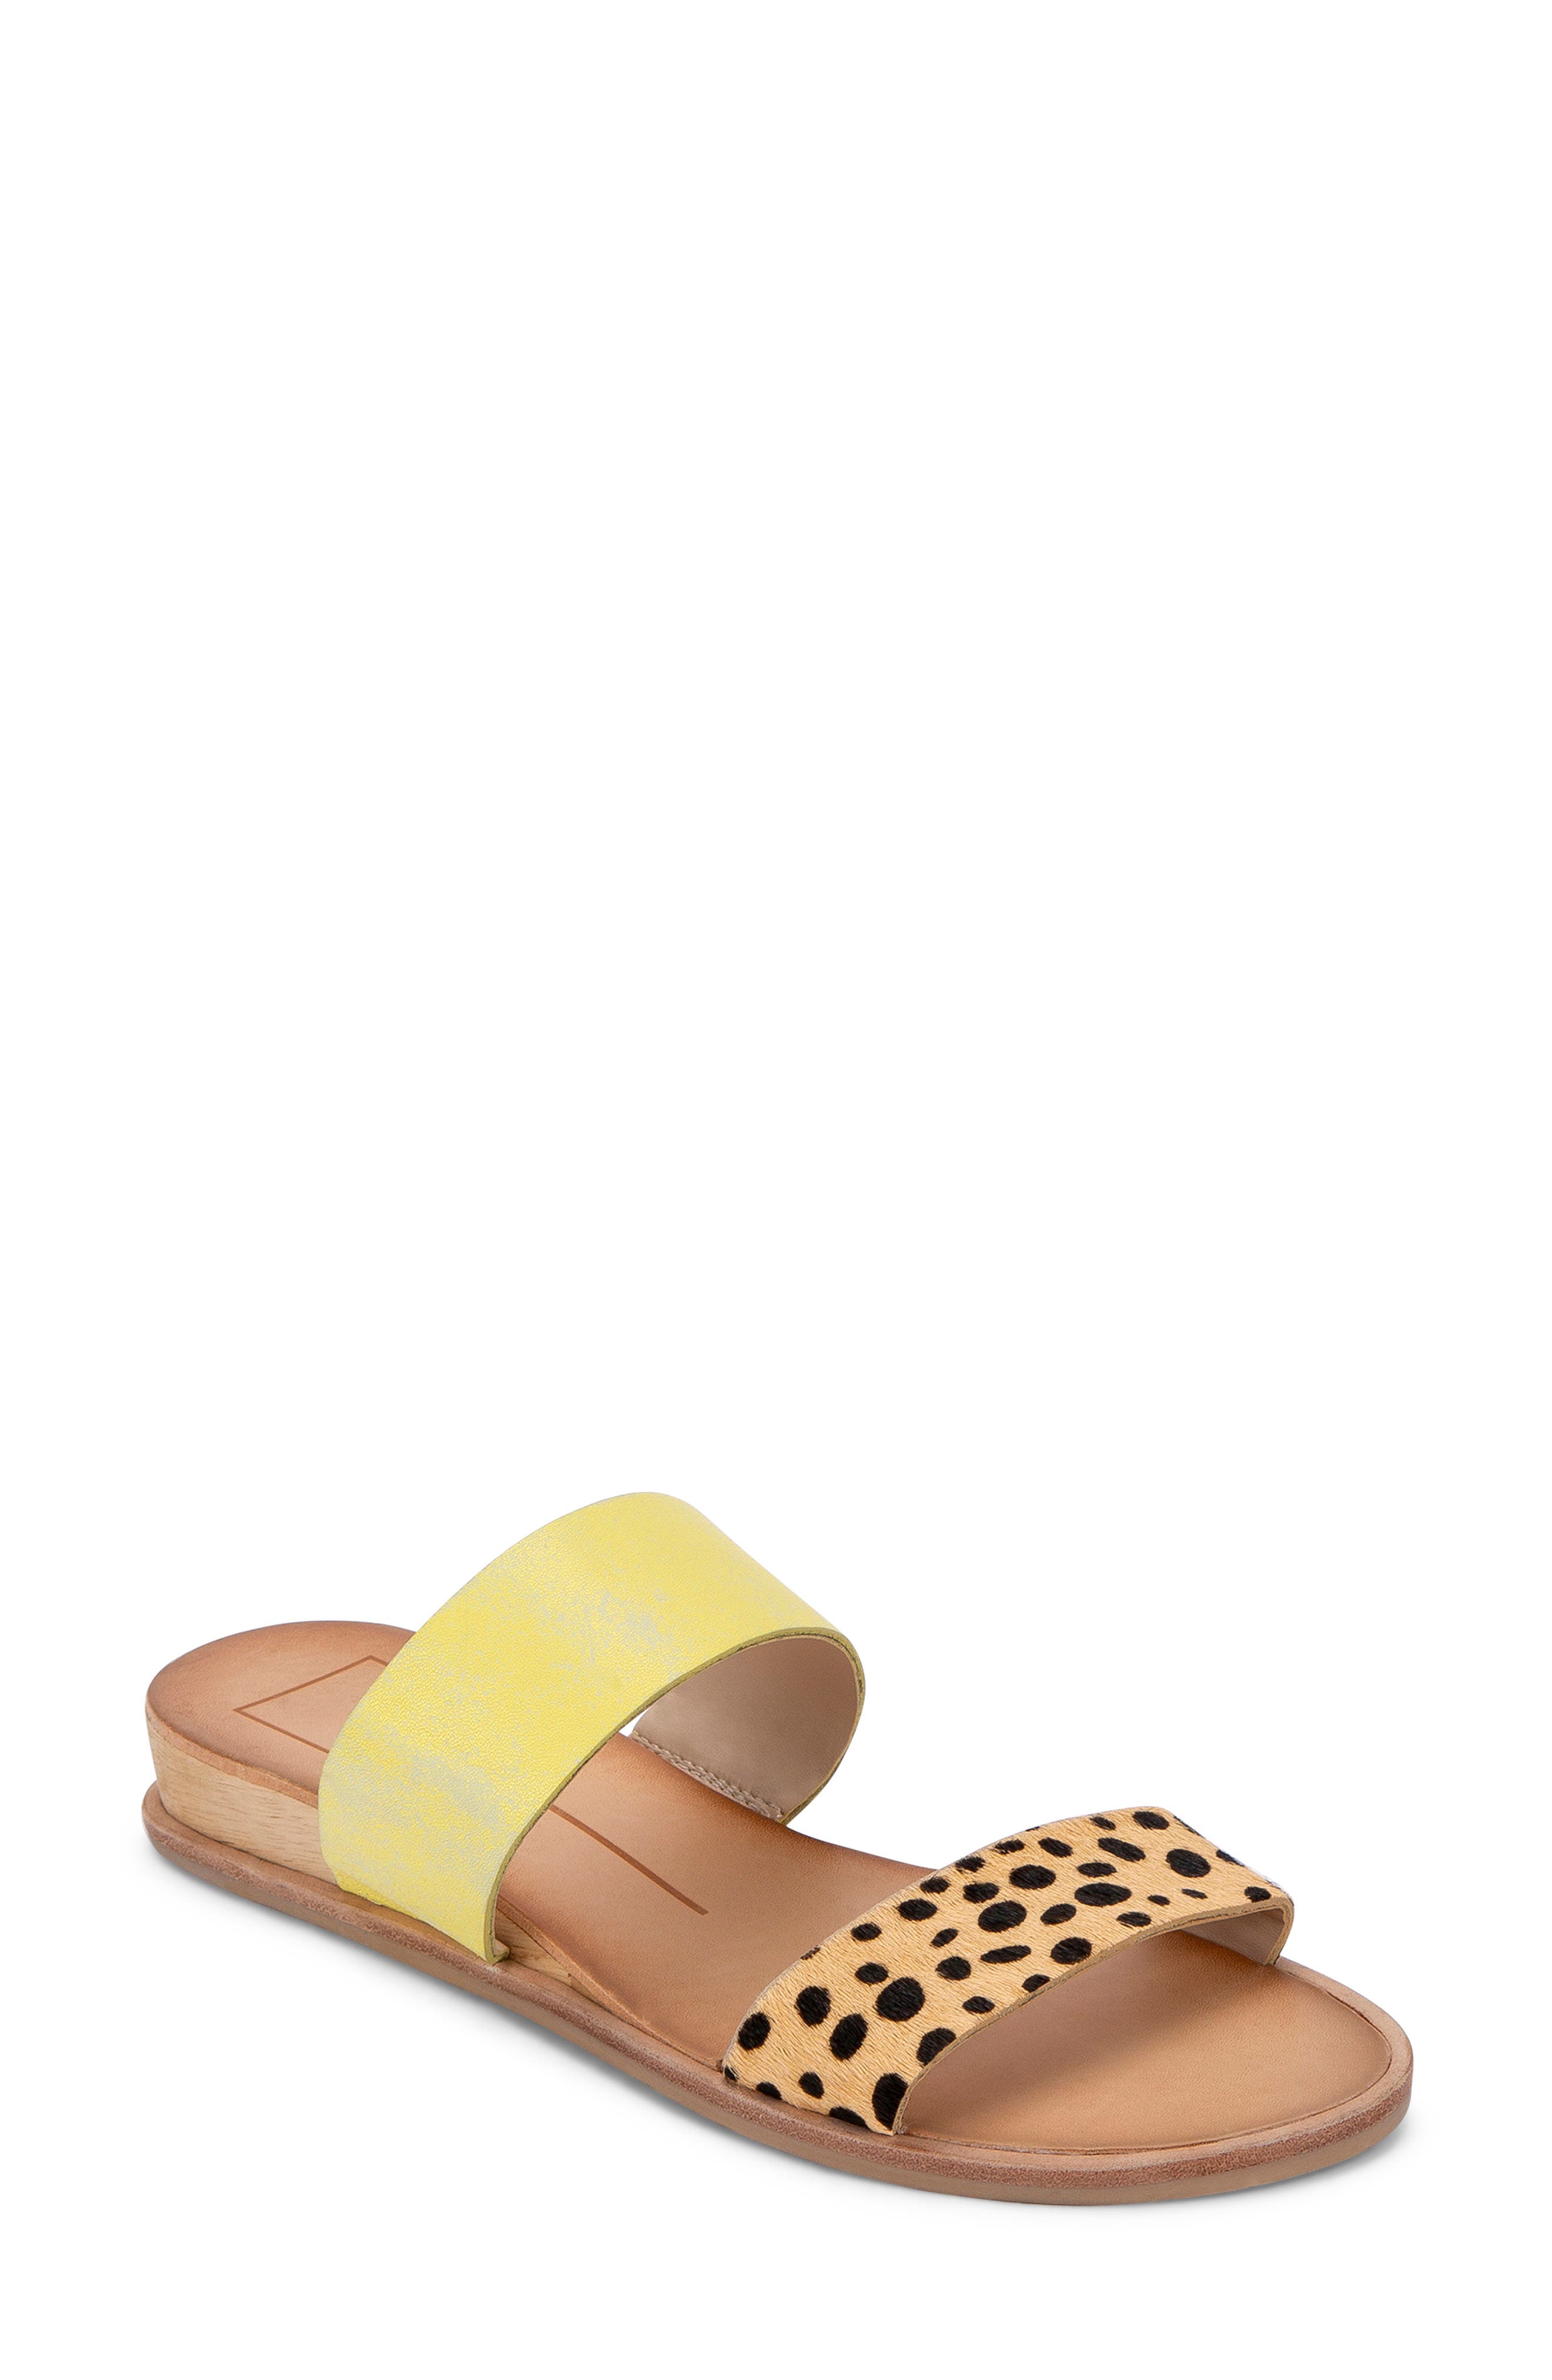 Dolce Vita 'payce' Slide Sandal In Leopard Multi Calf Hair